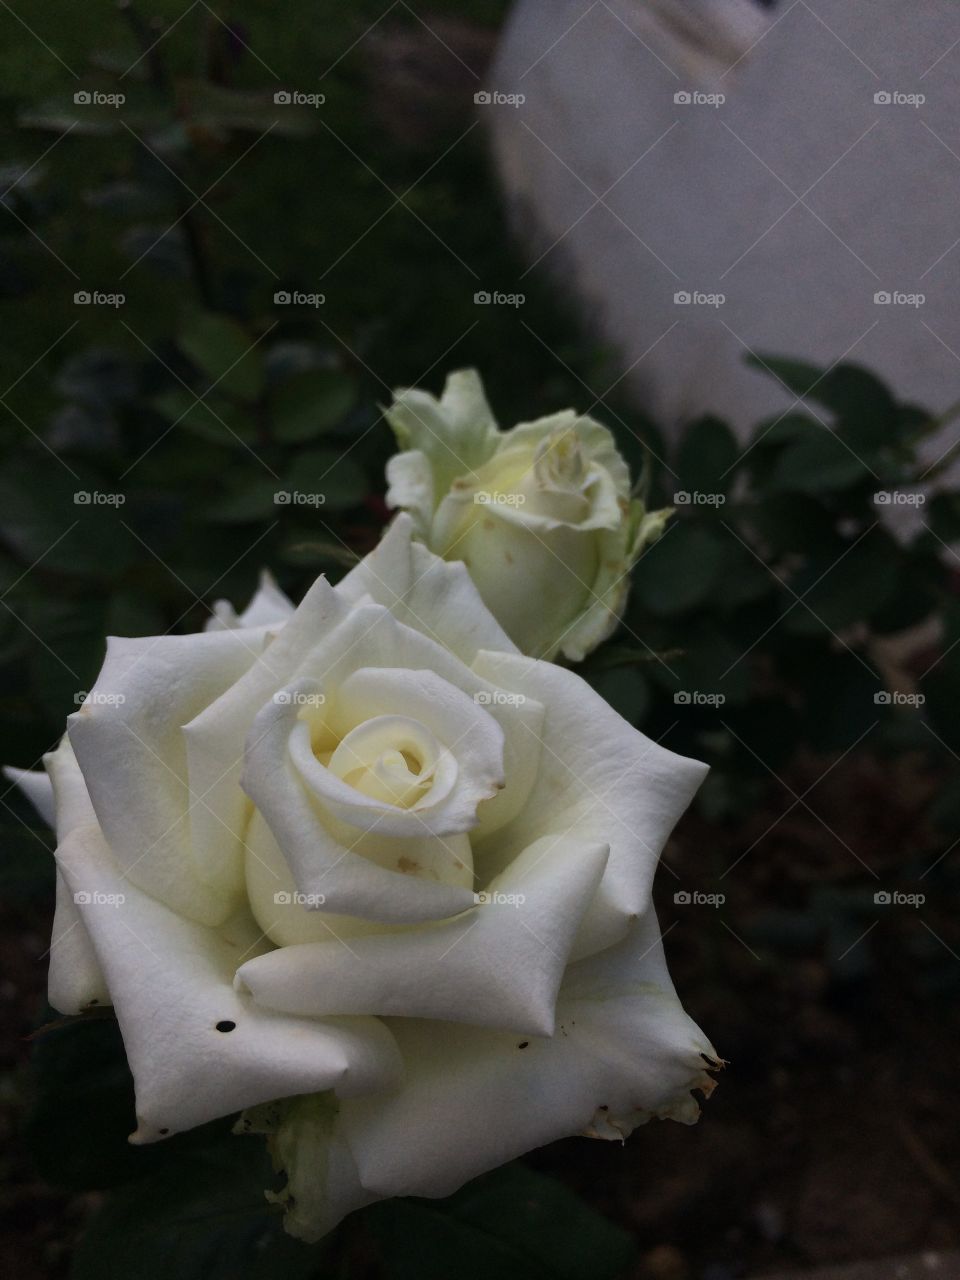 A wonderful white rose